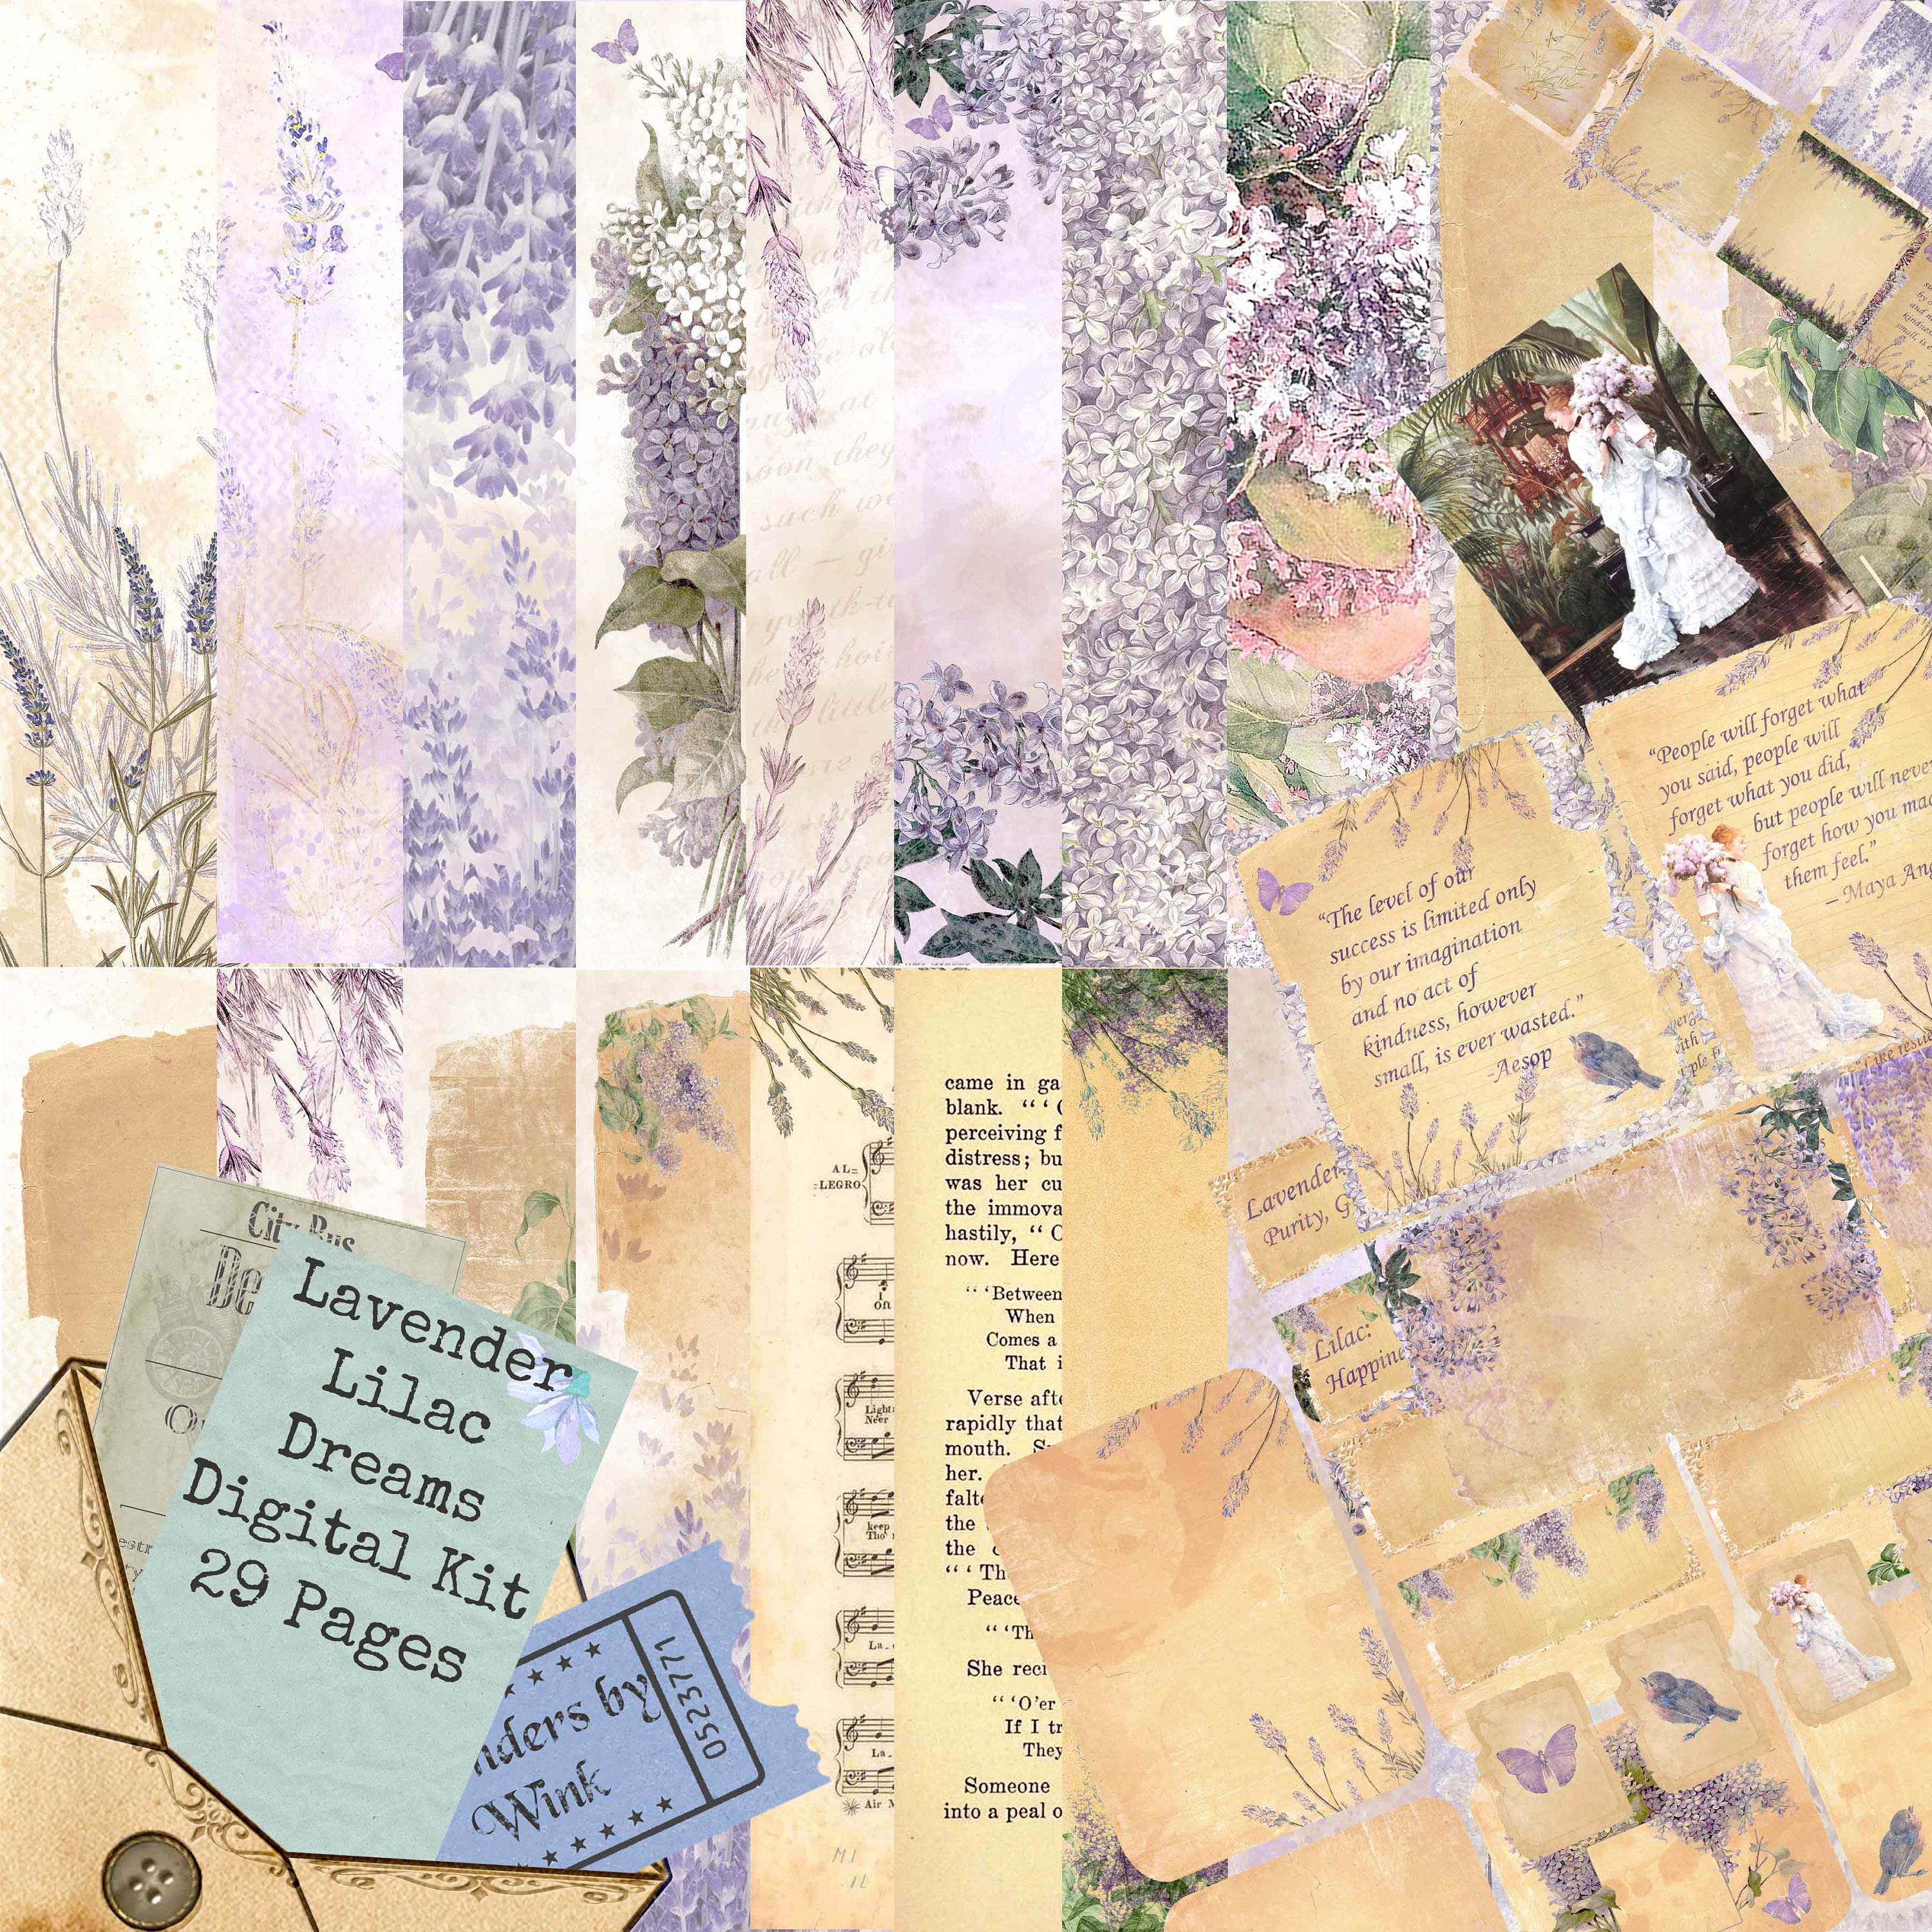 Lavender Lilac Dreams Journal Digital Kit 29 Pages Floral | Etsy